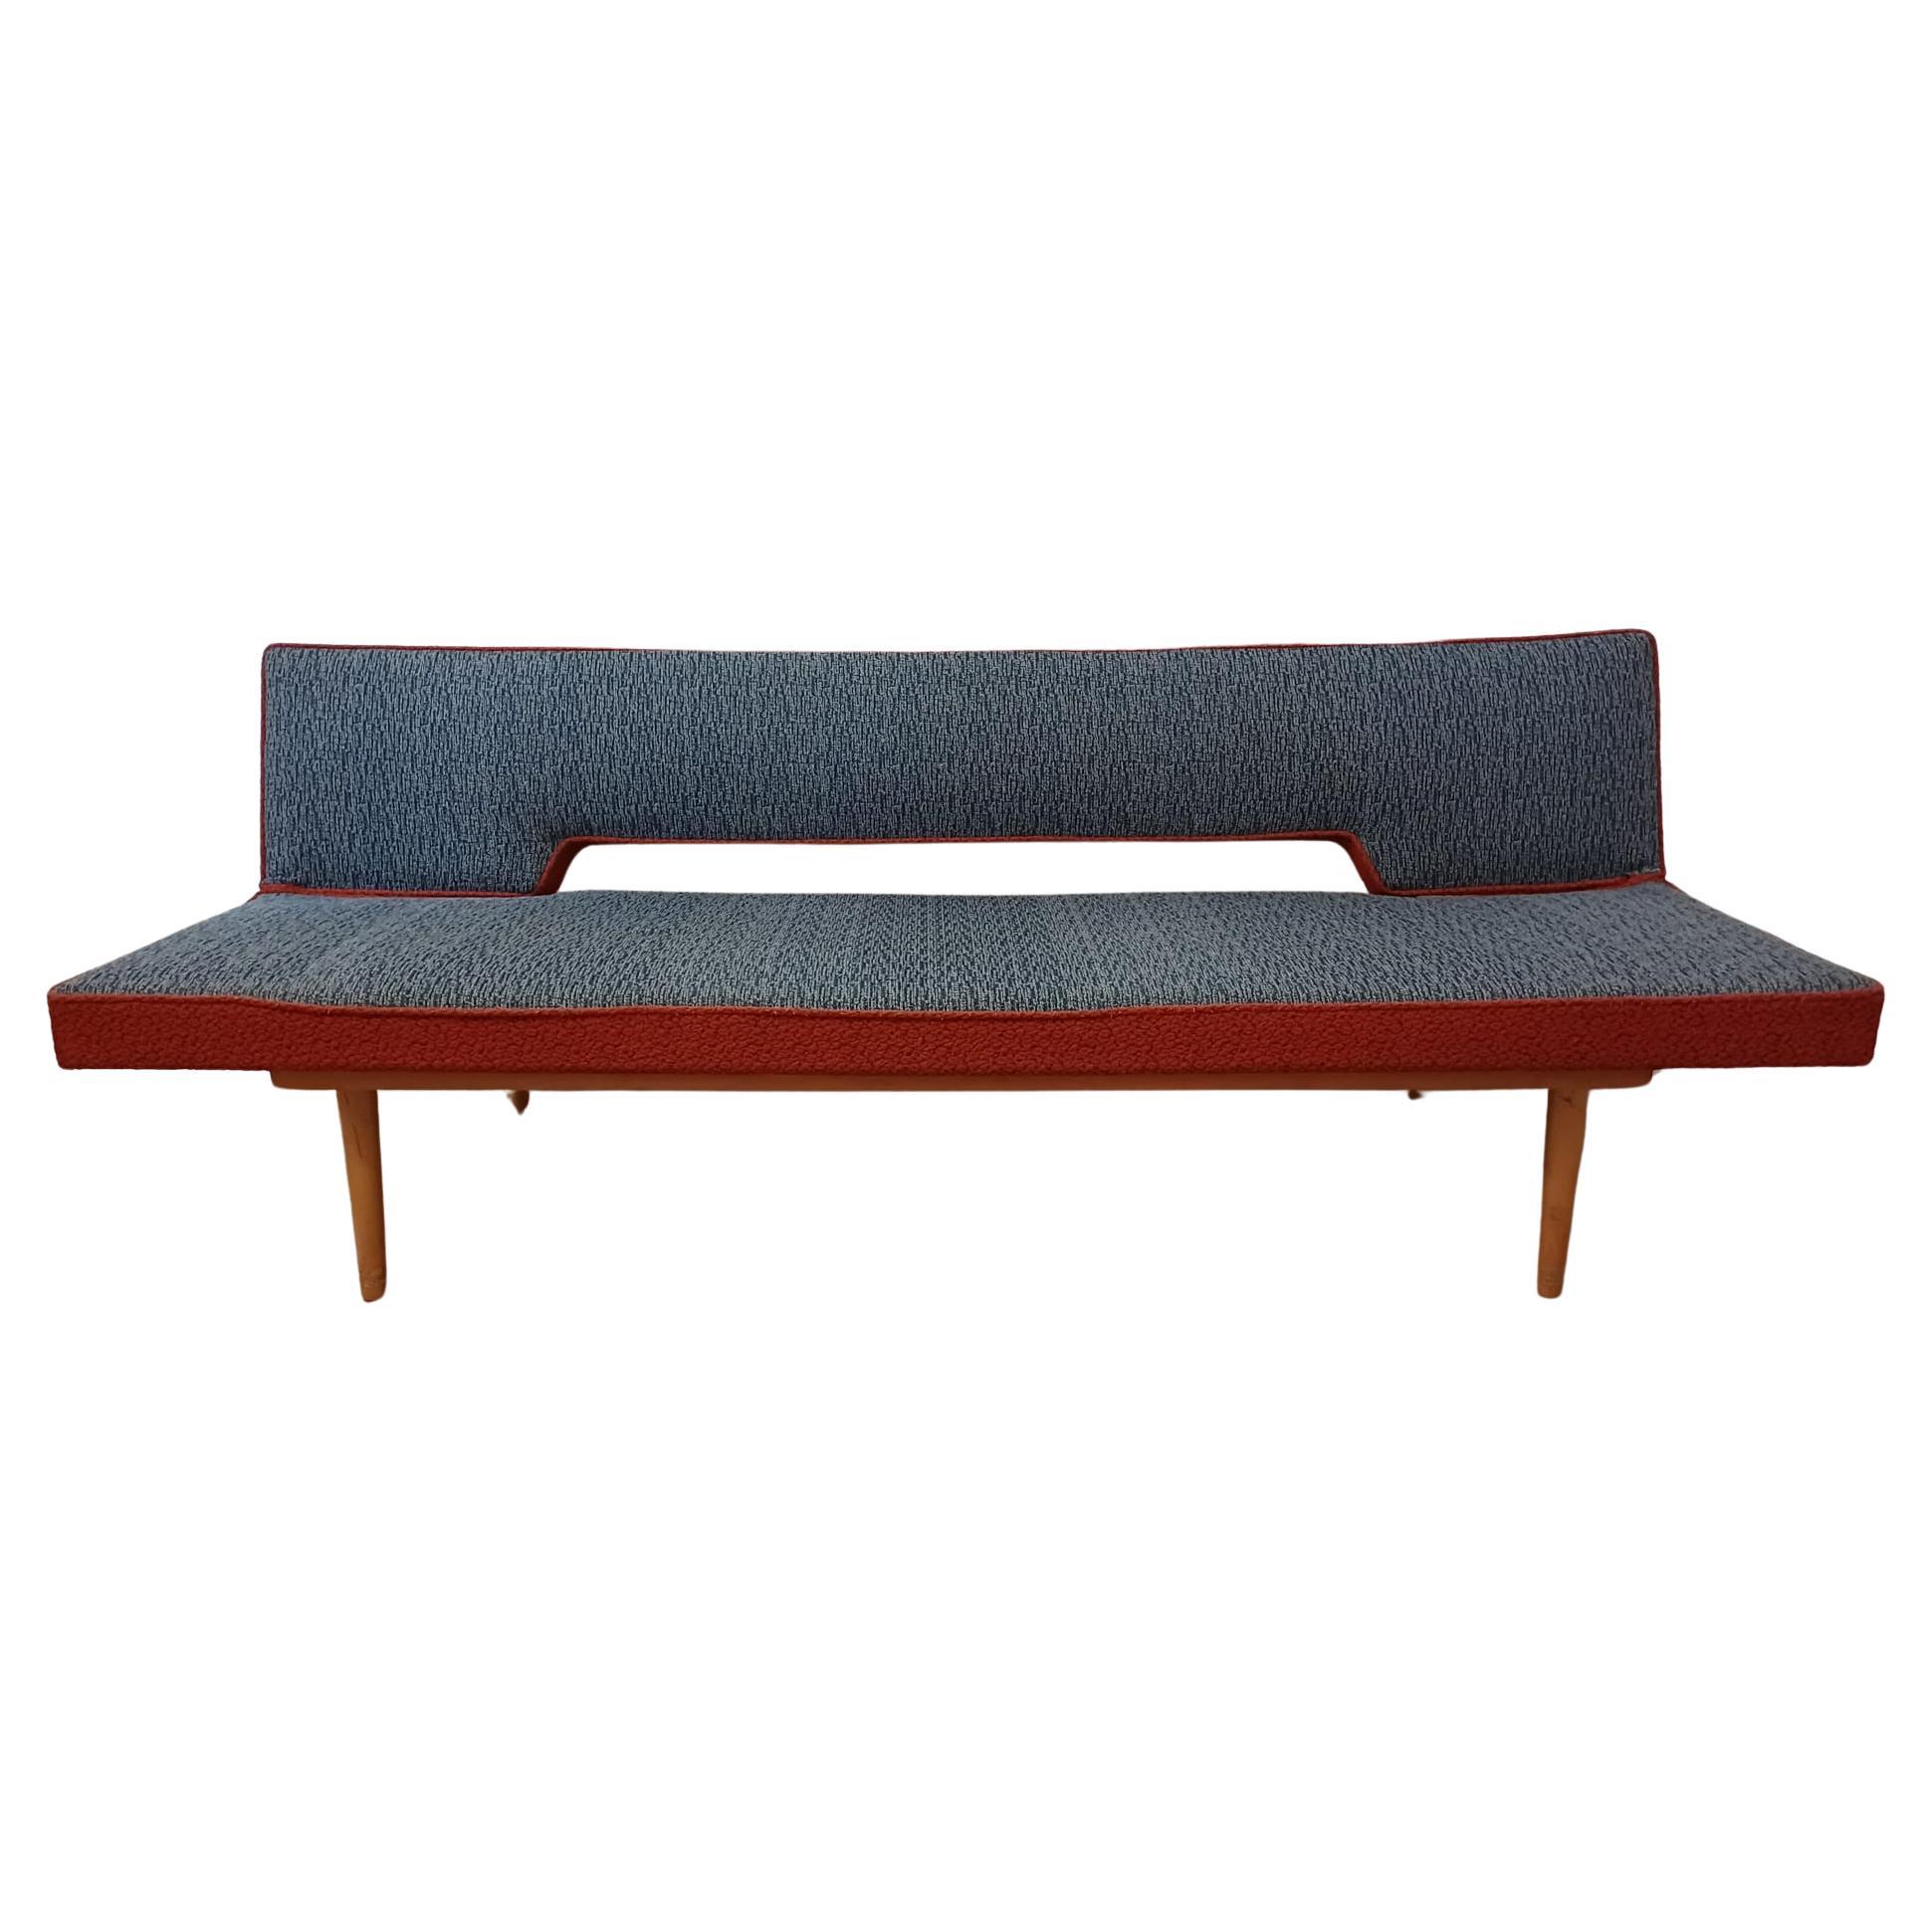 Midcentury Sofa or Daybed designed by Miroslav Navratil, 1960s. For Sale